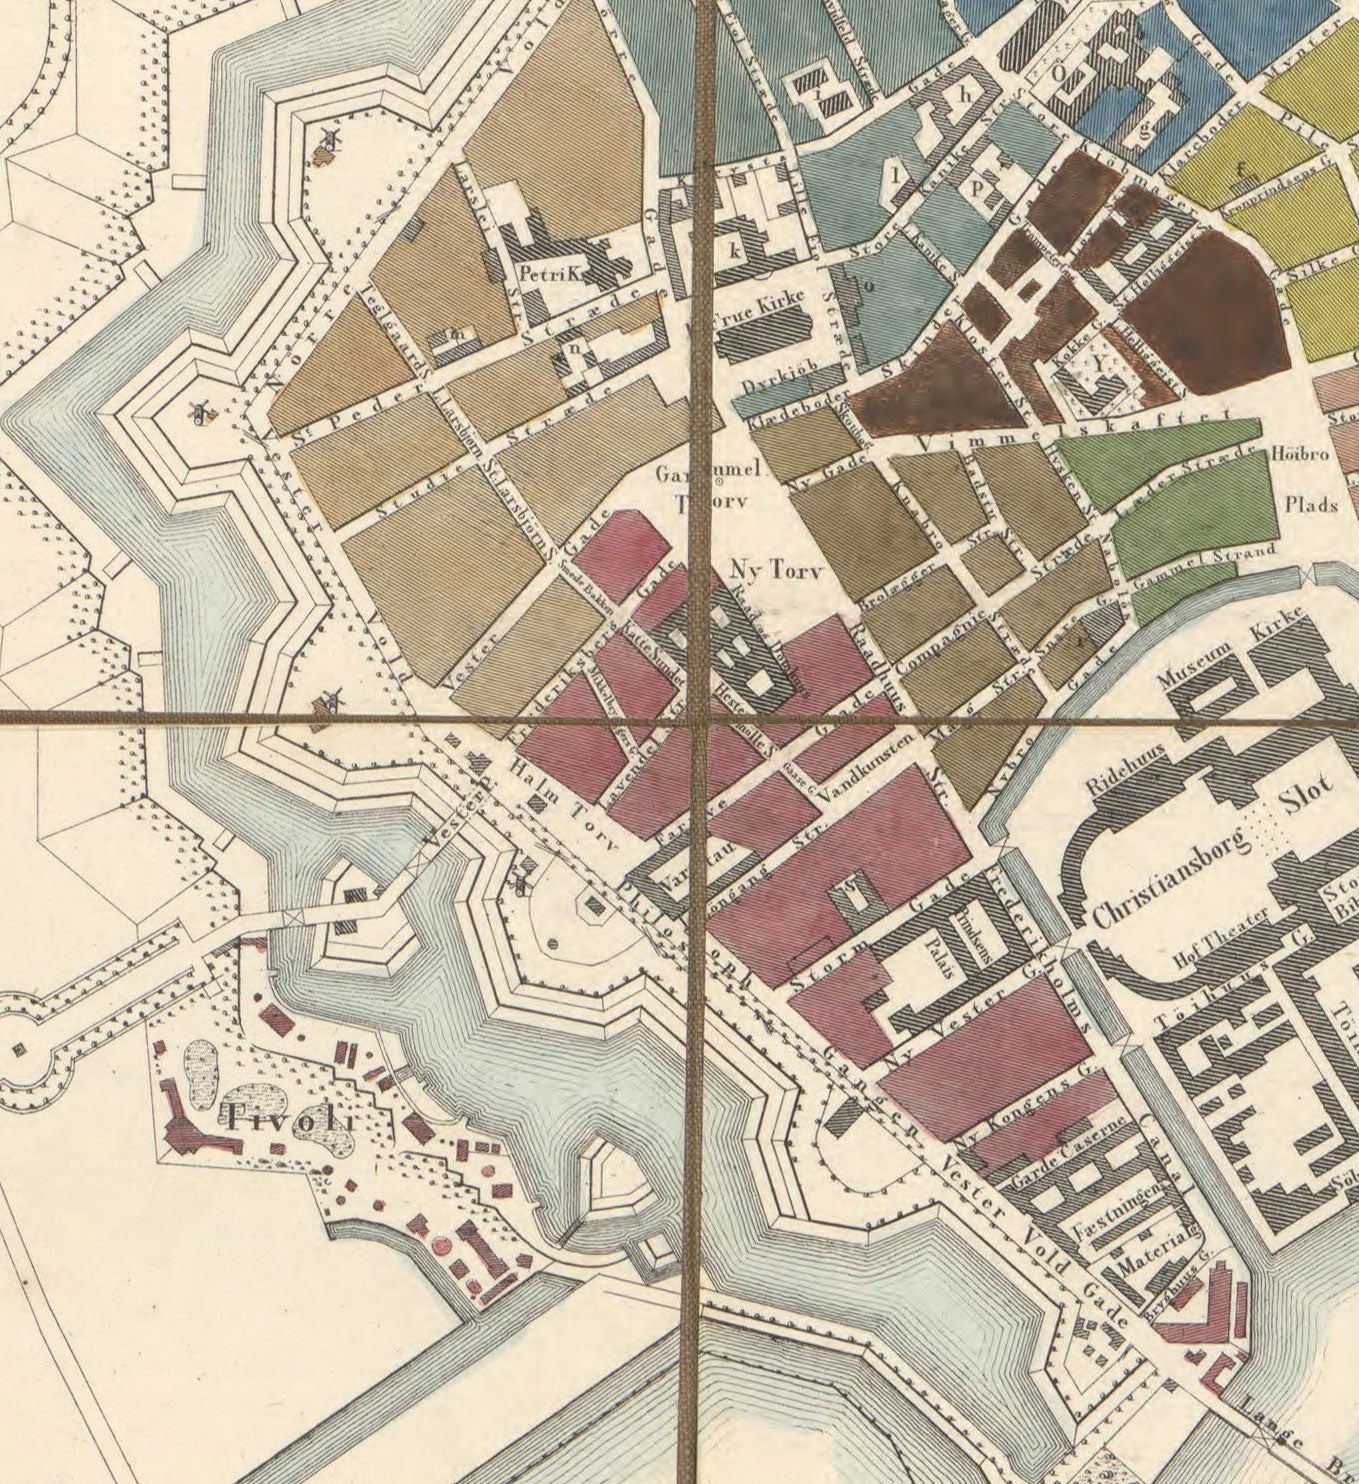 Old Street Map of Copenhagen in 1853 by Millard Fillmore - Borsen, Holmen, Kastellet, Christianshavn, Slotsholmen